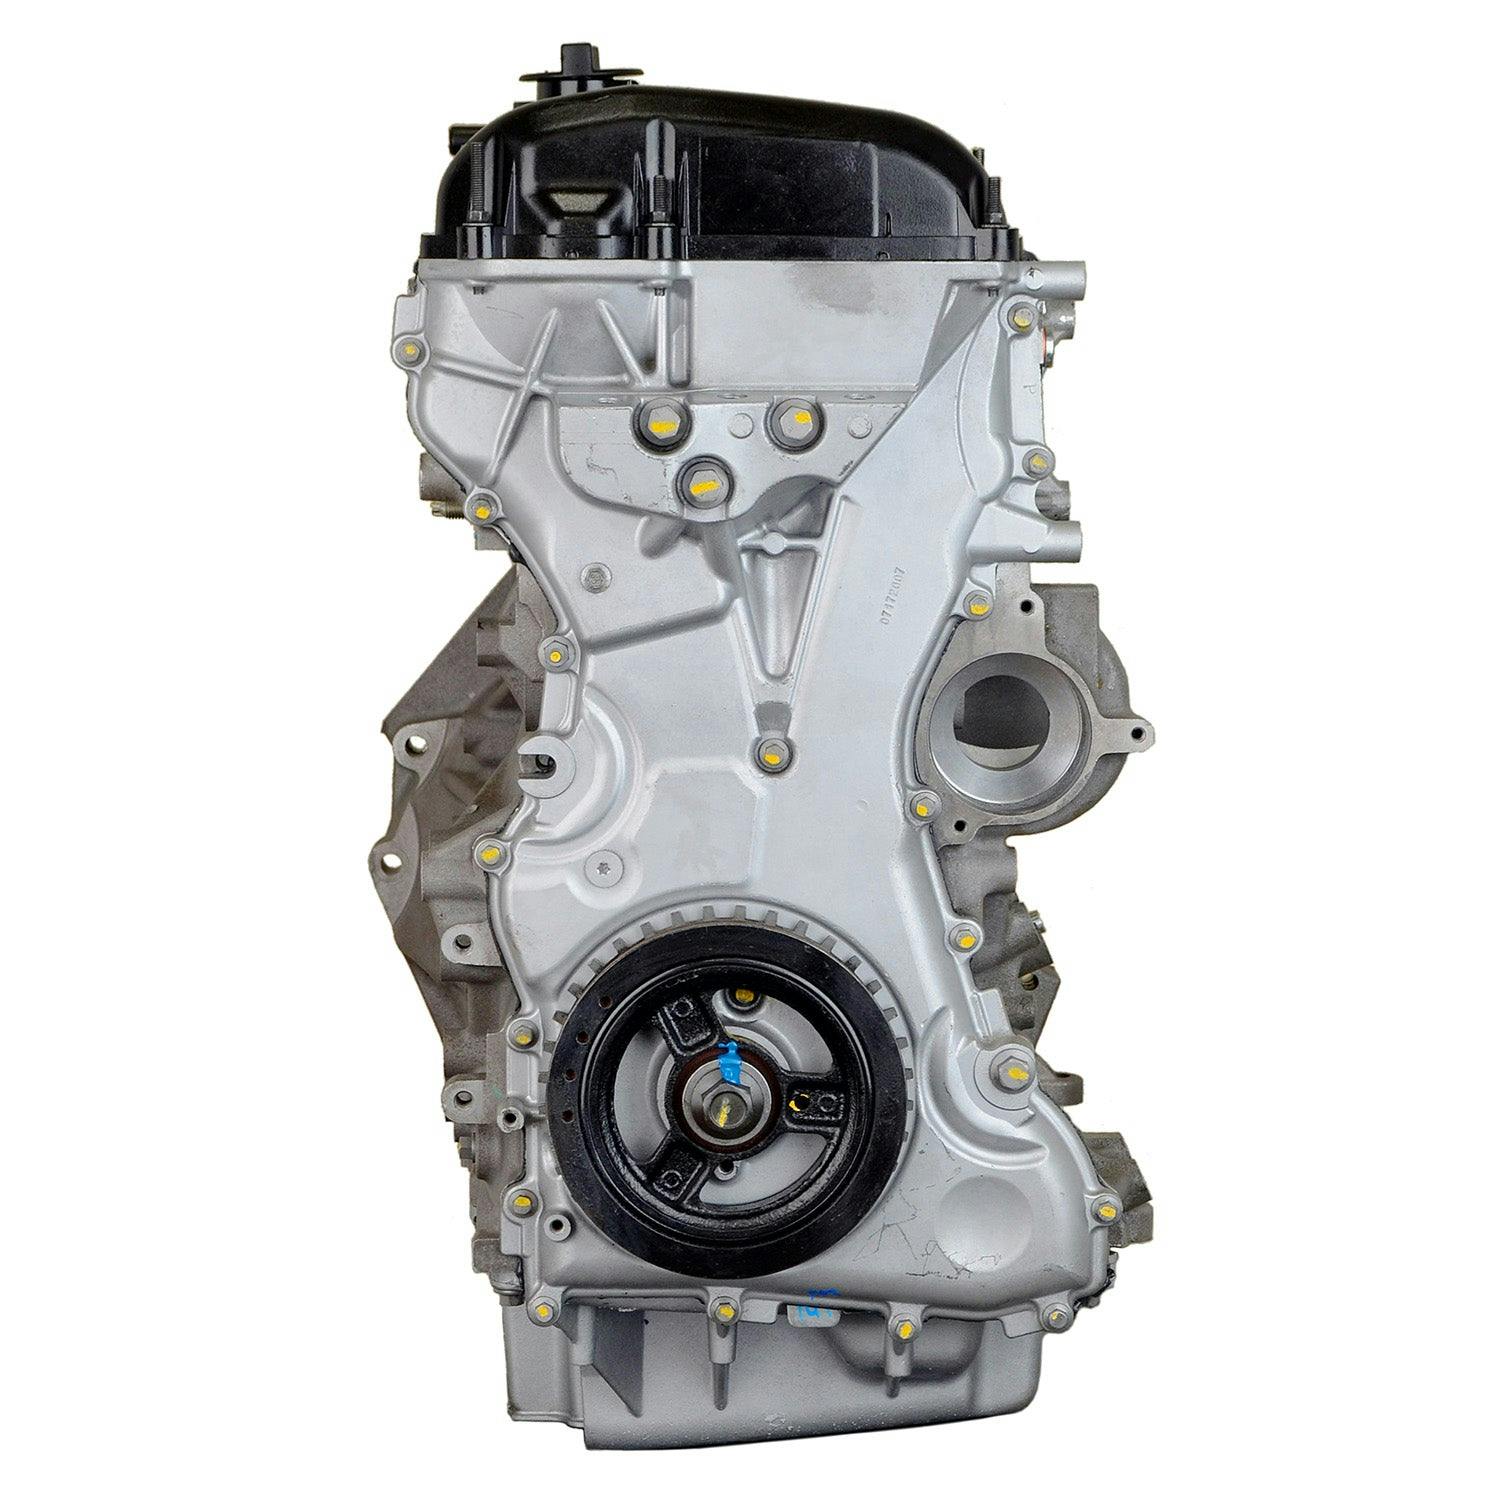 2.3L Inline-4 Engine for 2008 Ford Escape/Mazda Tribute/Mercury Mariner